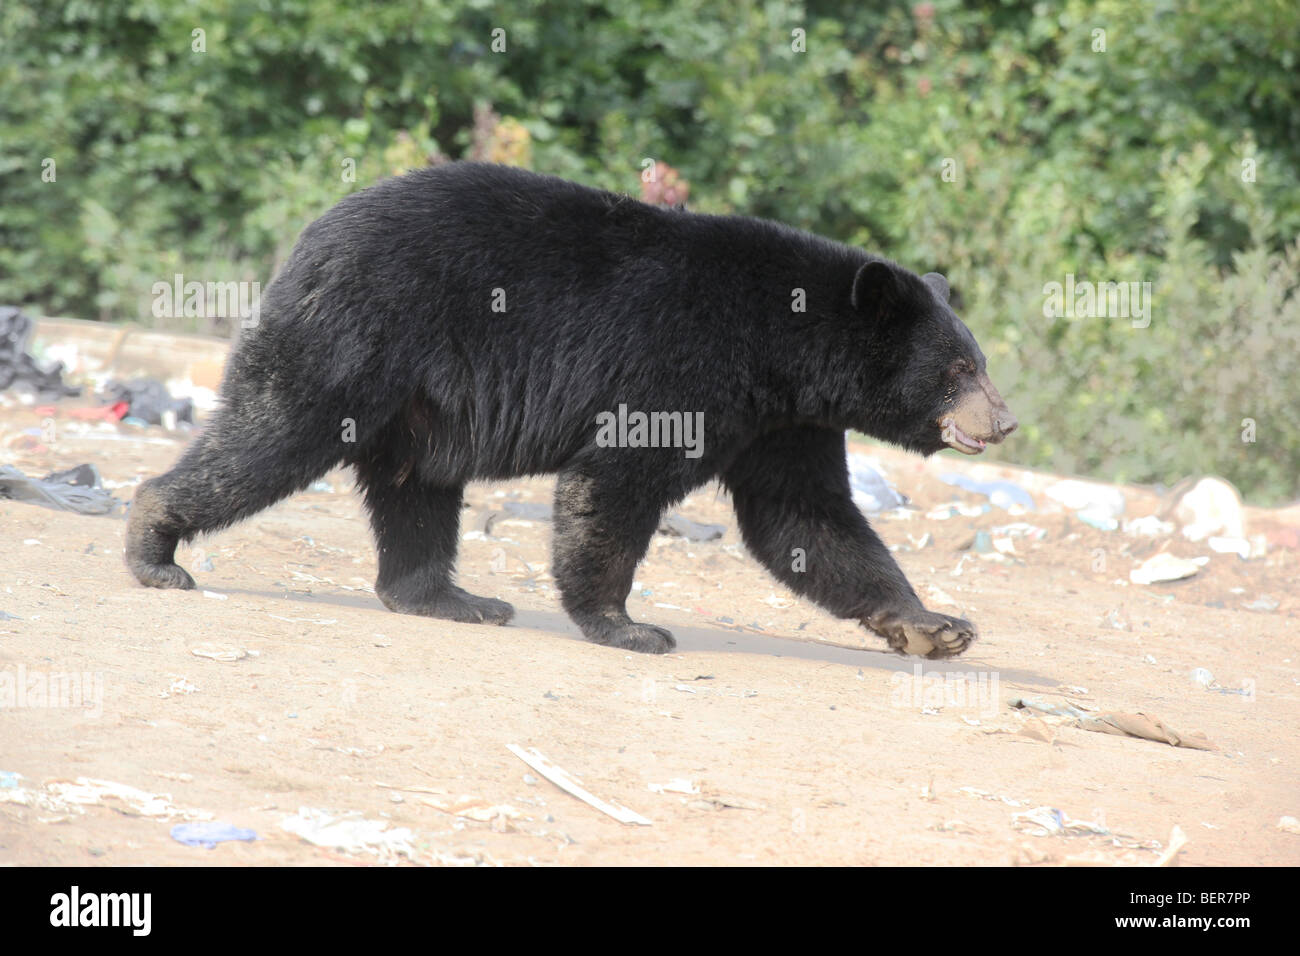 black bear walking briskly Stock Photo